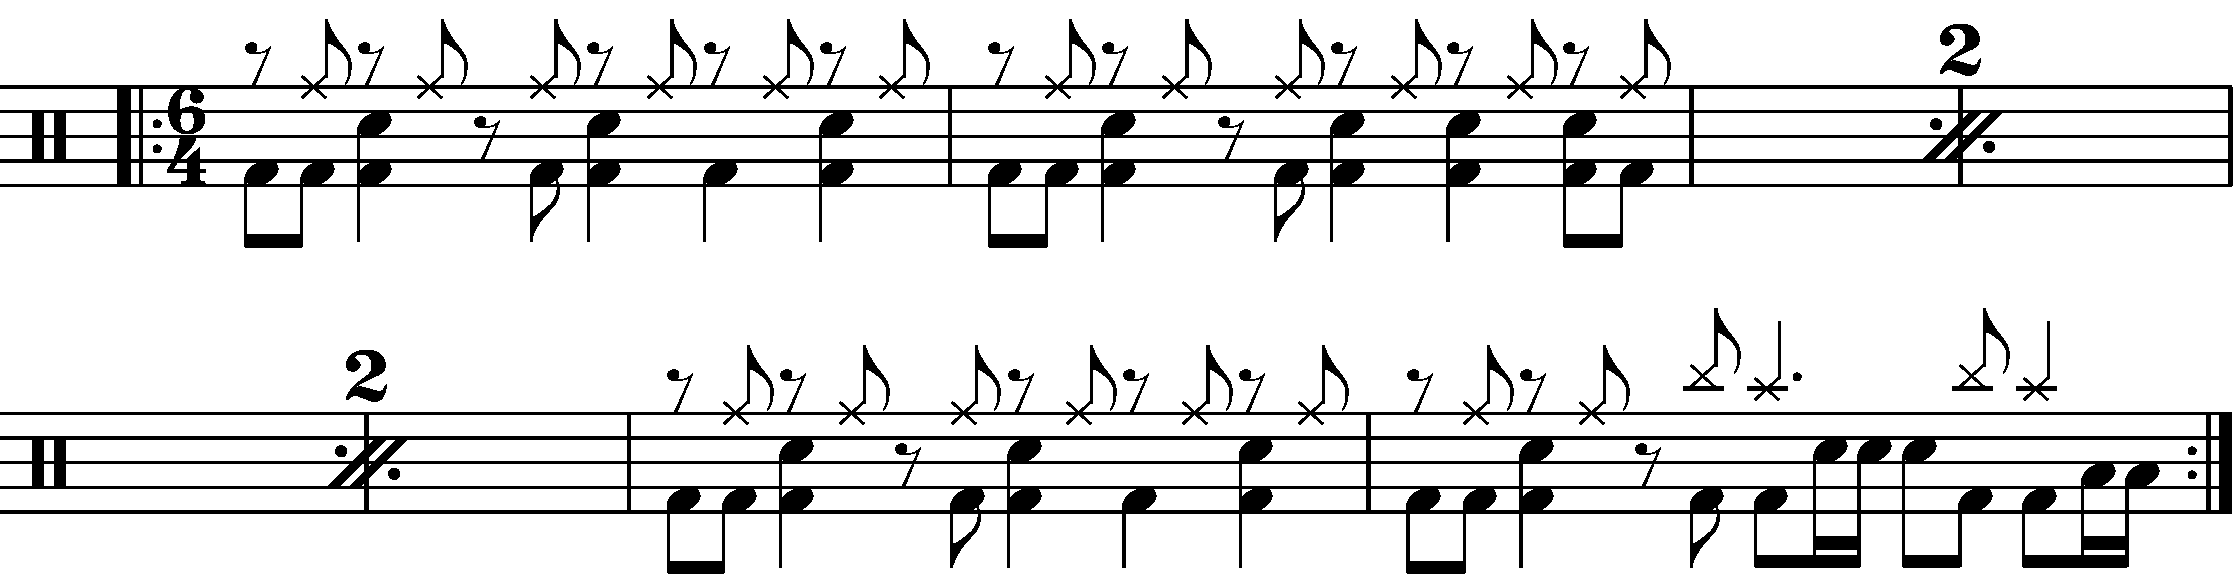 An eight bar phrase built of an AAAB pattern using 2 bar 6/4 grooves